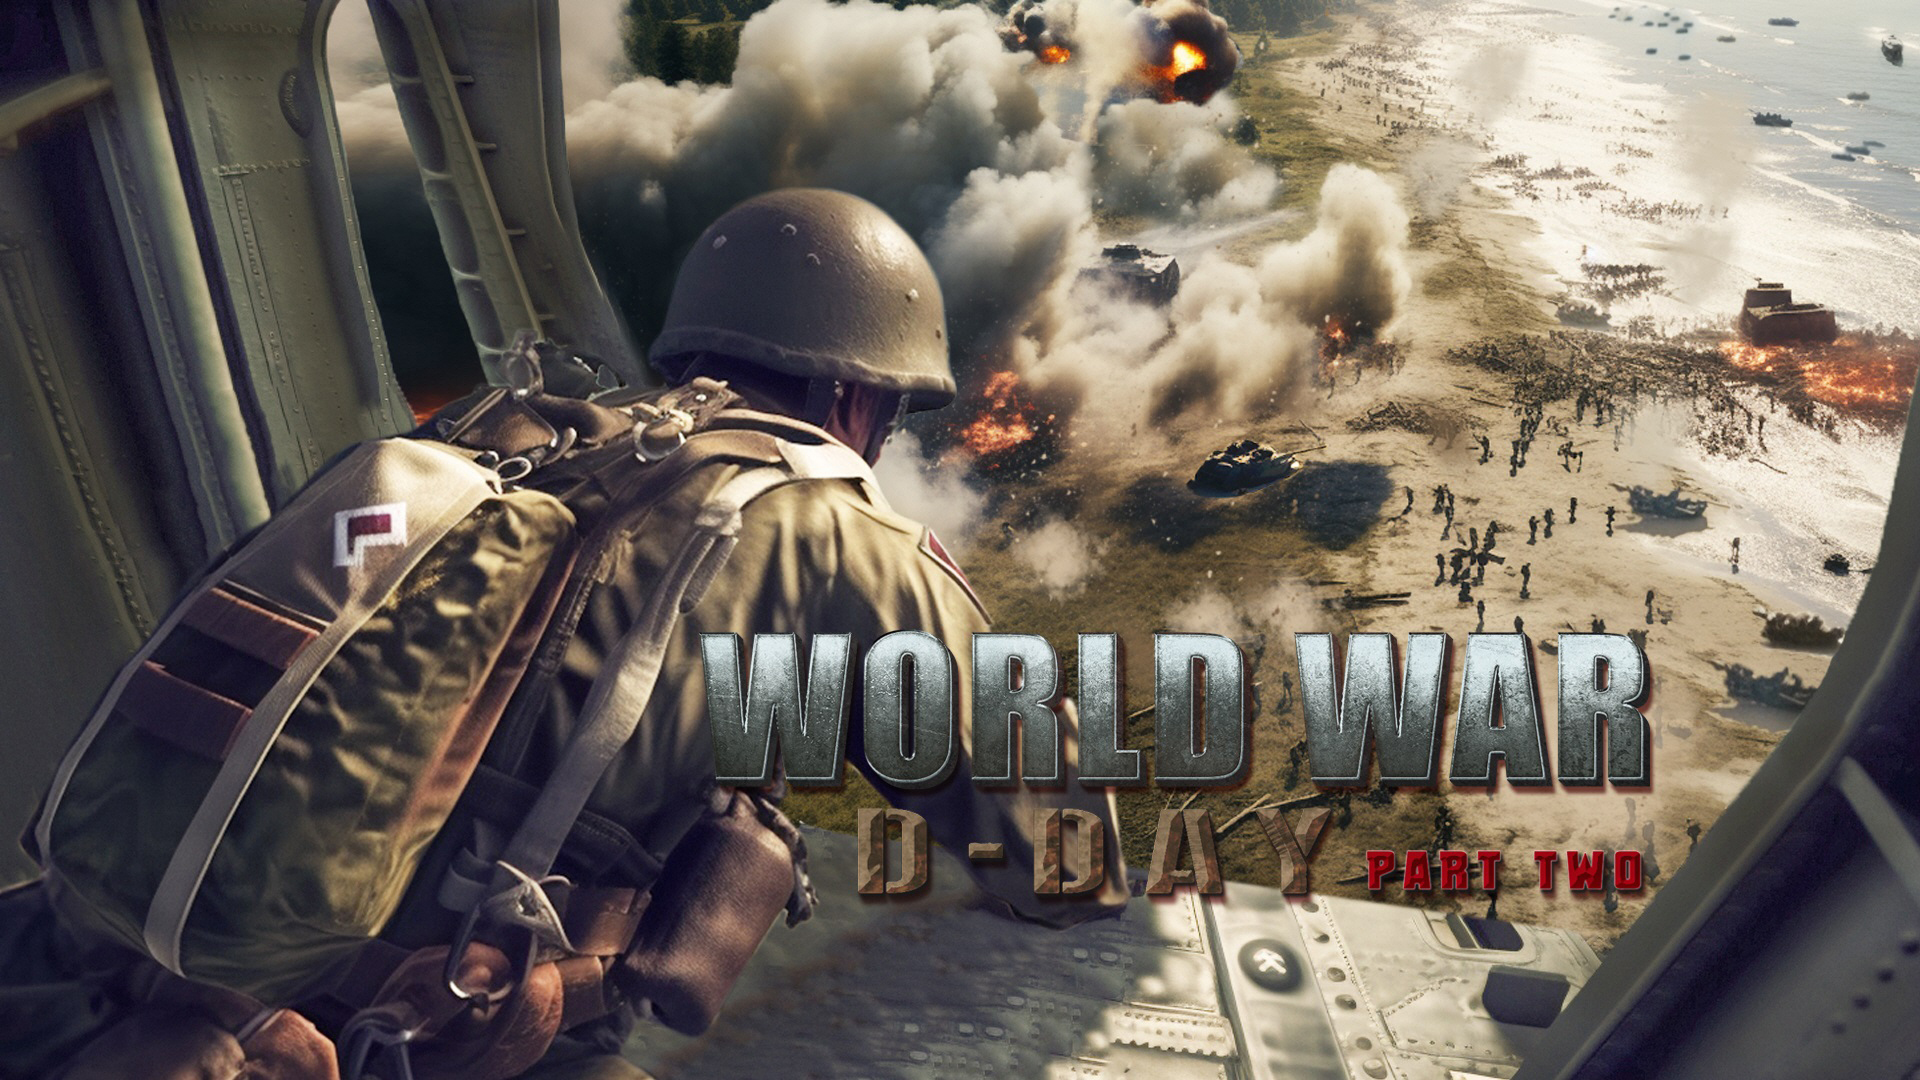 Call of Duty: Infinite Warfare - Metacritic